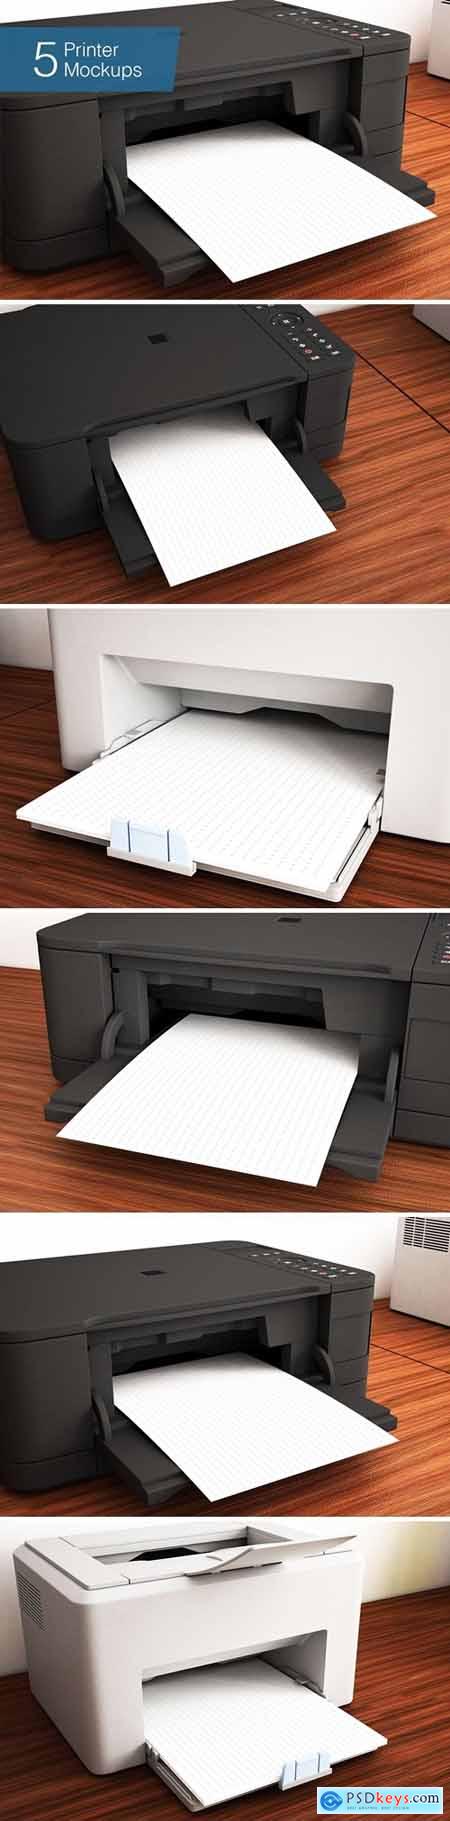 Printer Mockup - 5 Poses